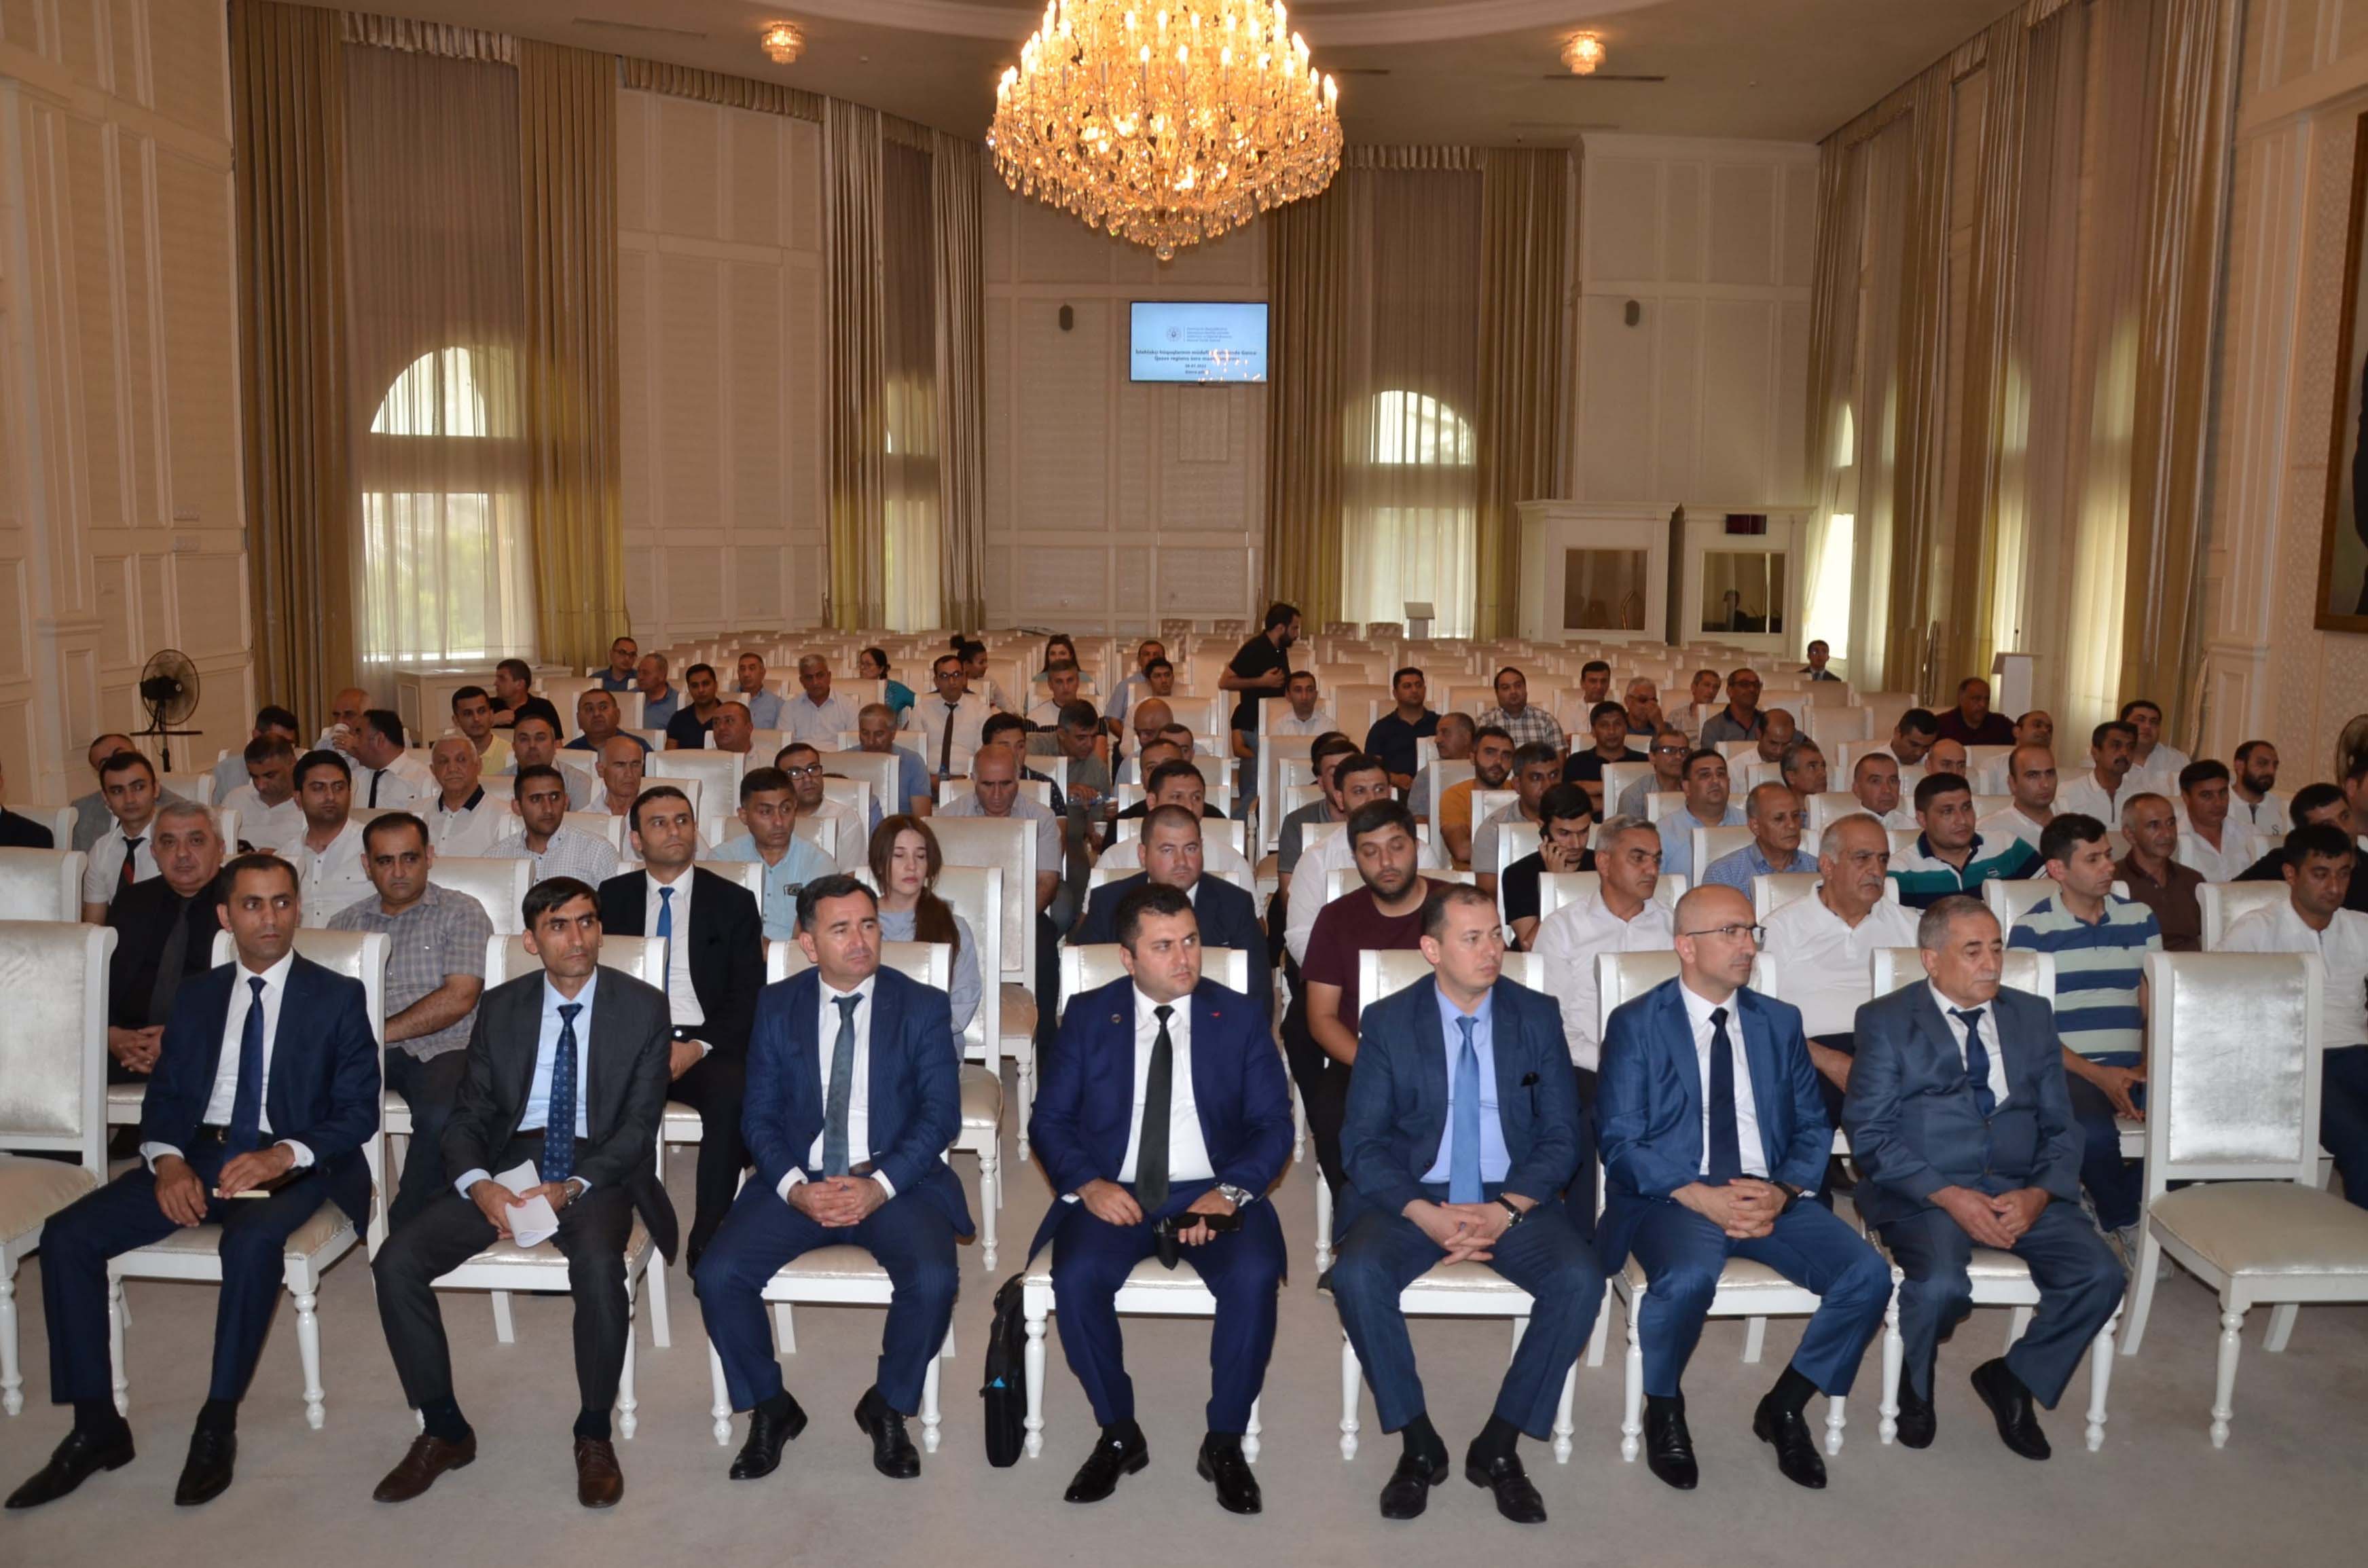 A Memorandum of Understanding was signed between the State Service and the Baku Higher Oil School